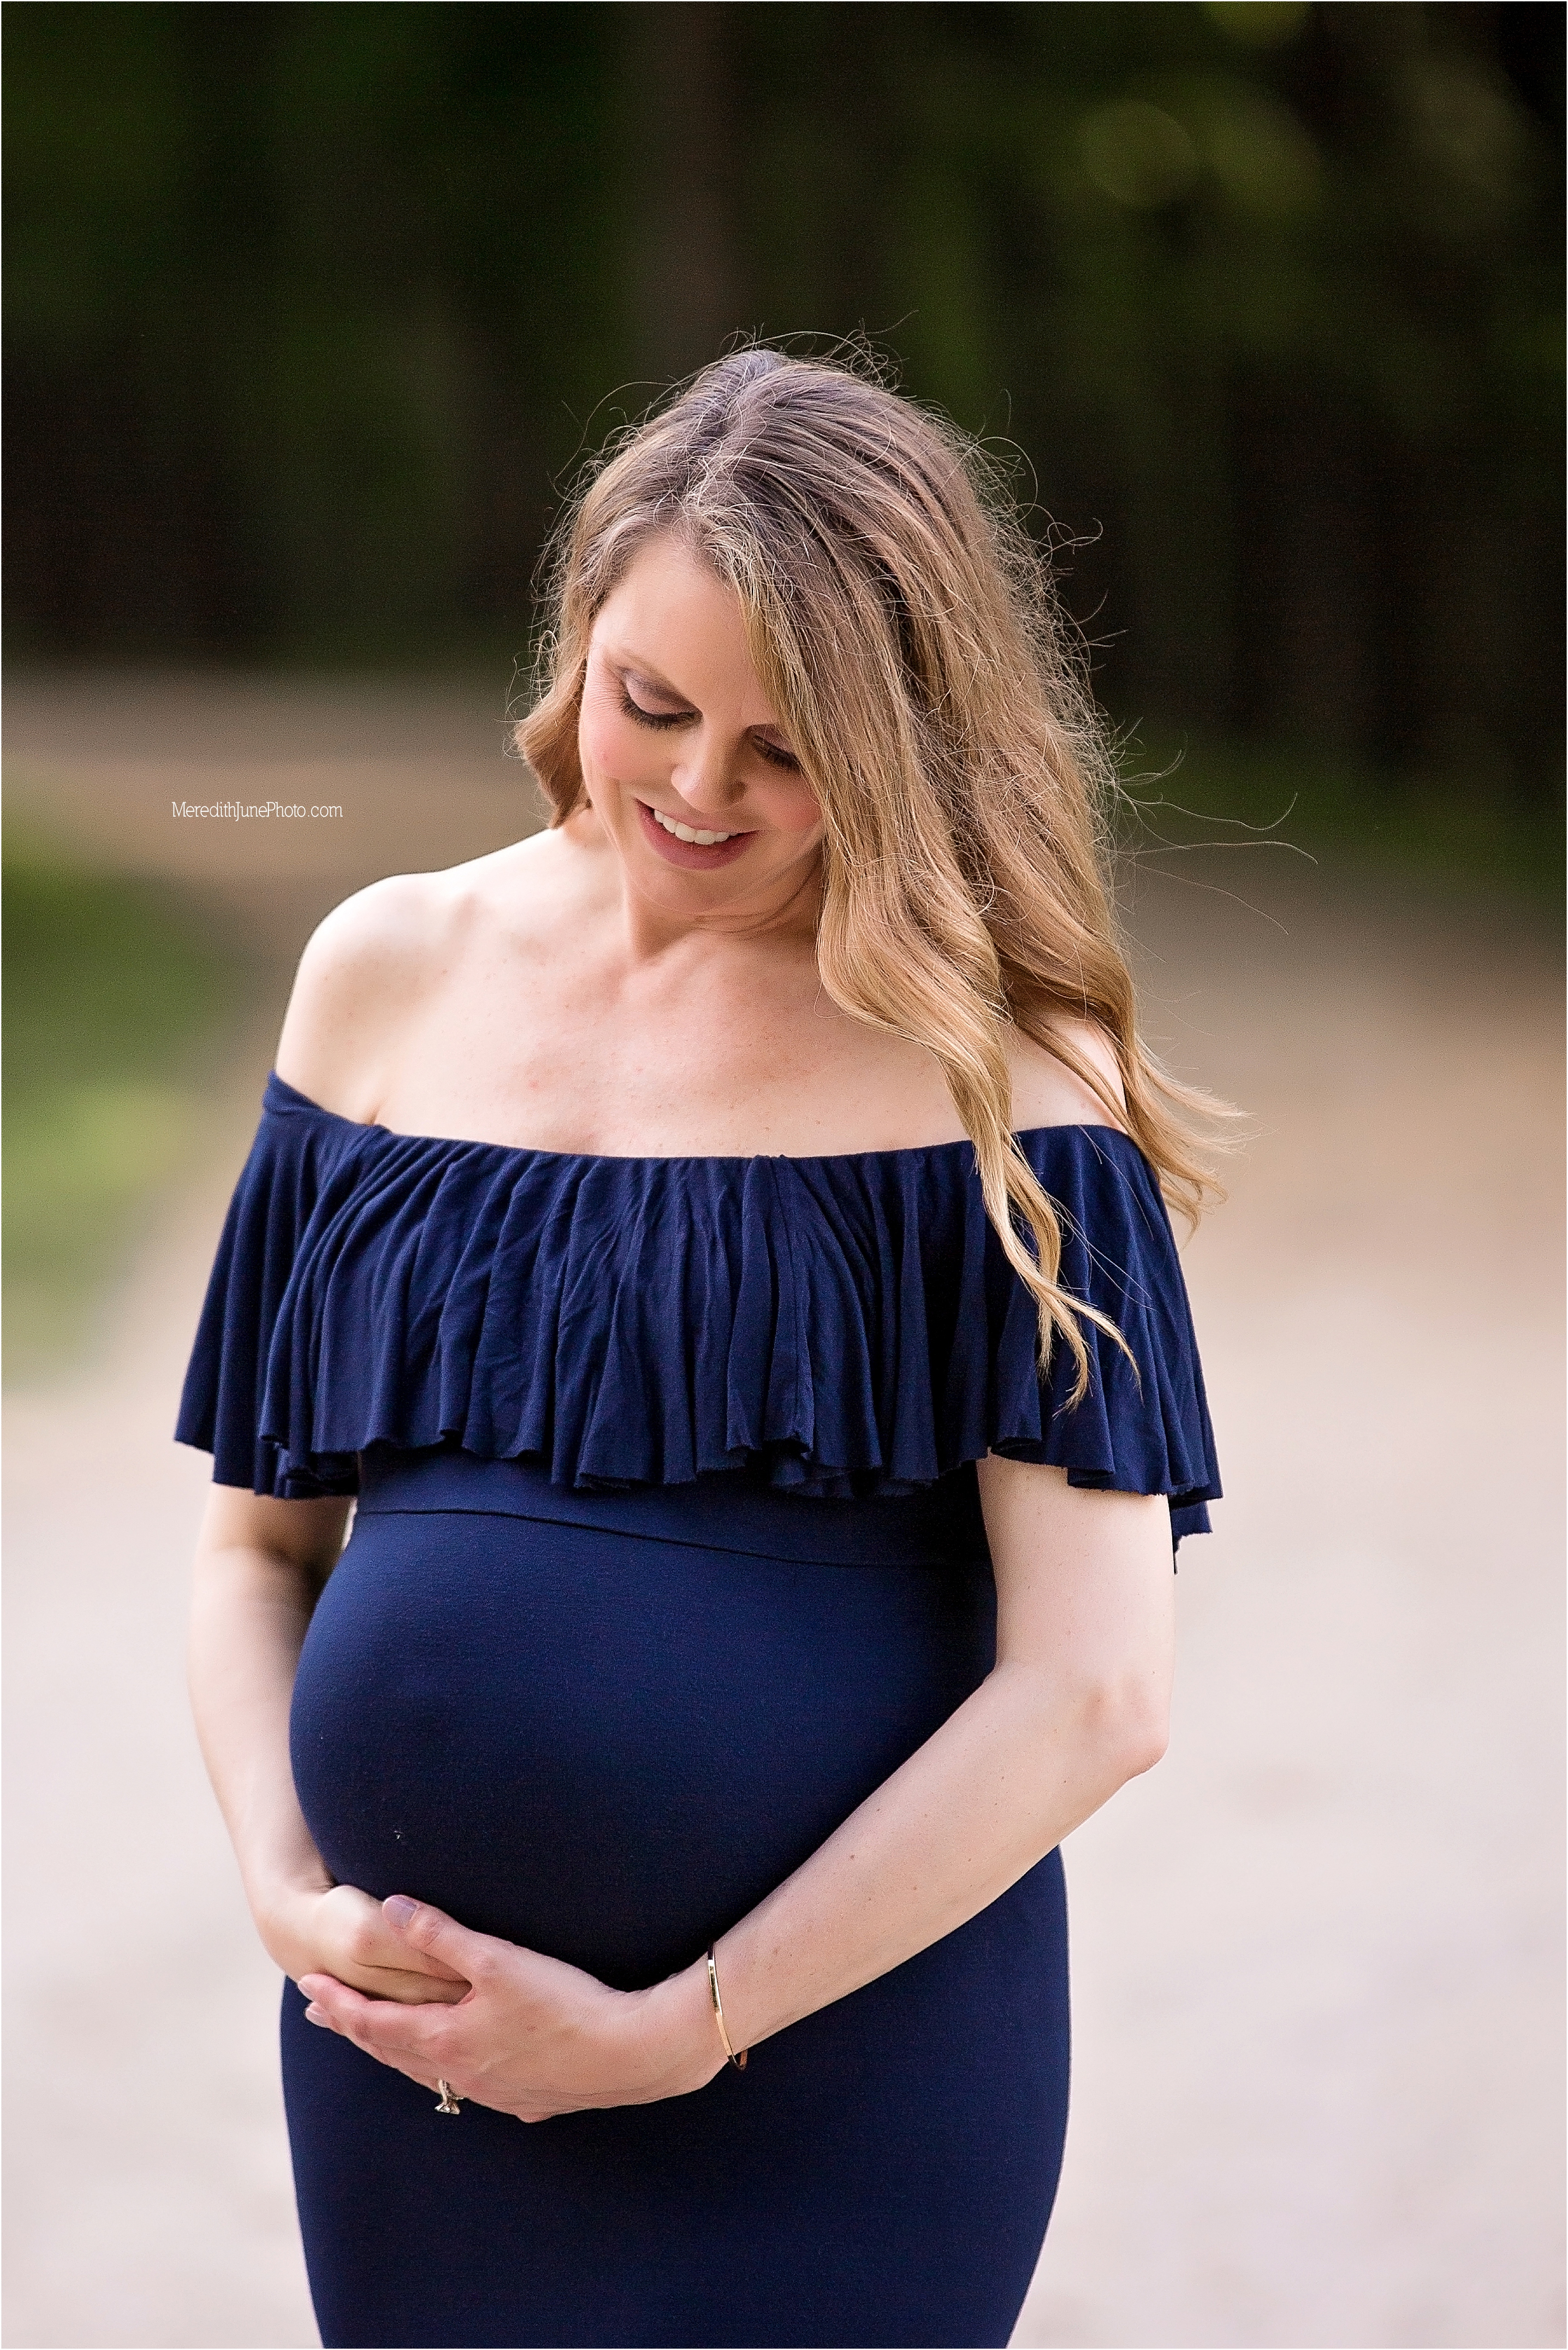 Keovilay maternity photo session in South Carolina 